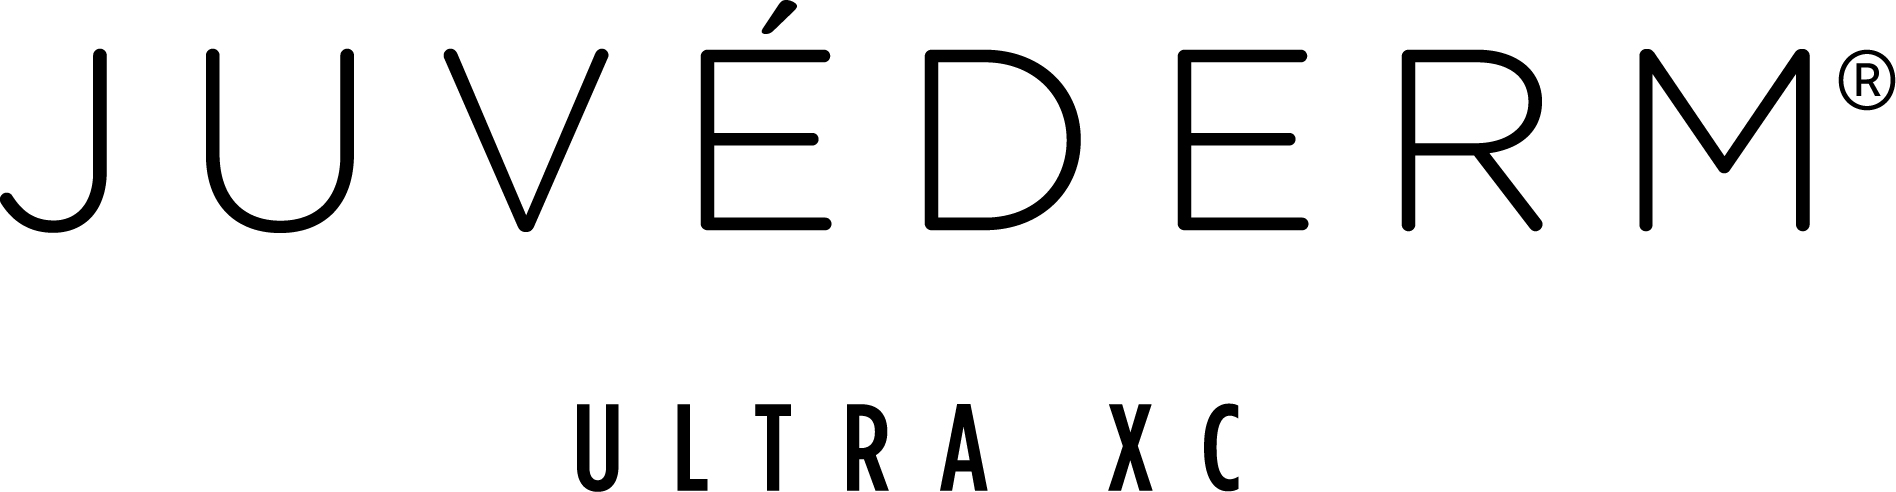 New Juvederm Ultra XC logo